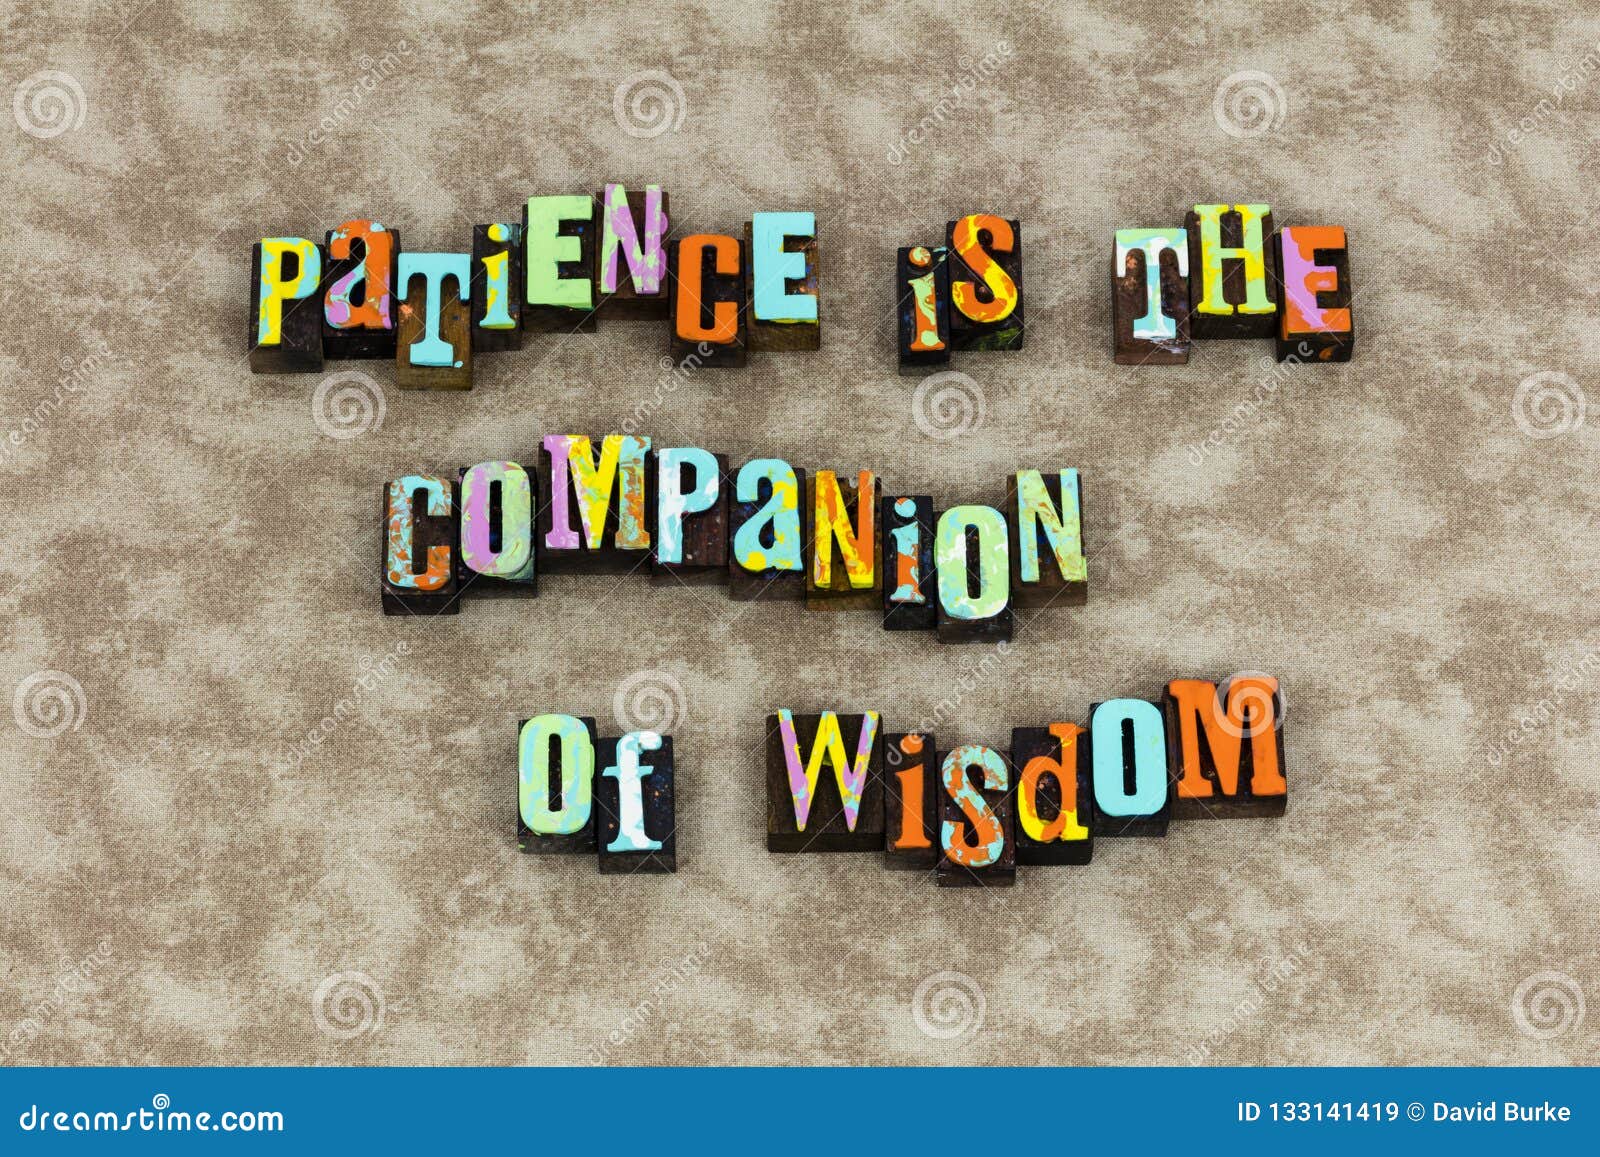 patience companion wisdom education time